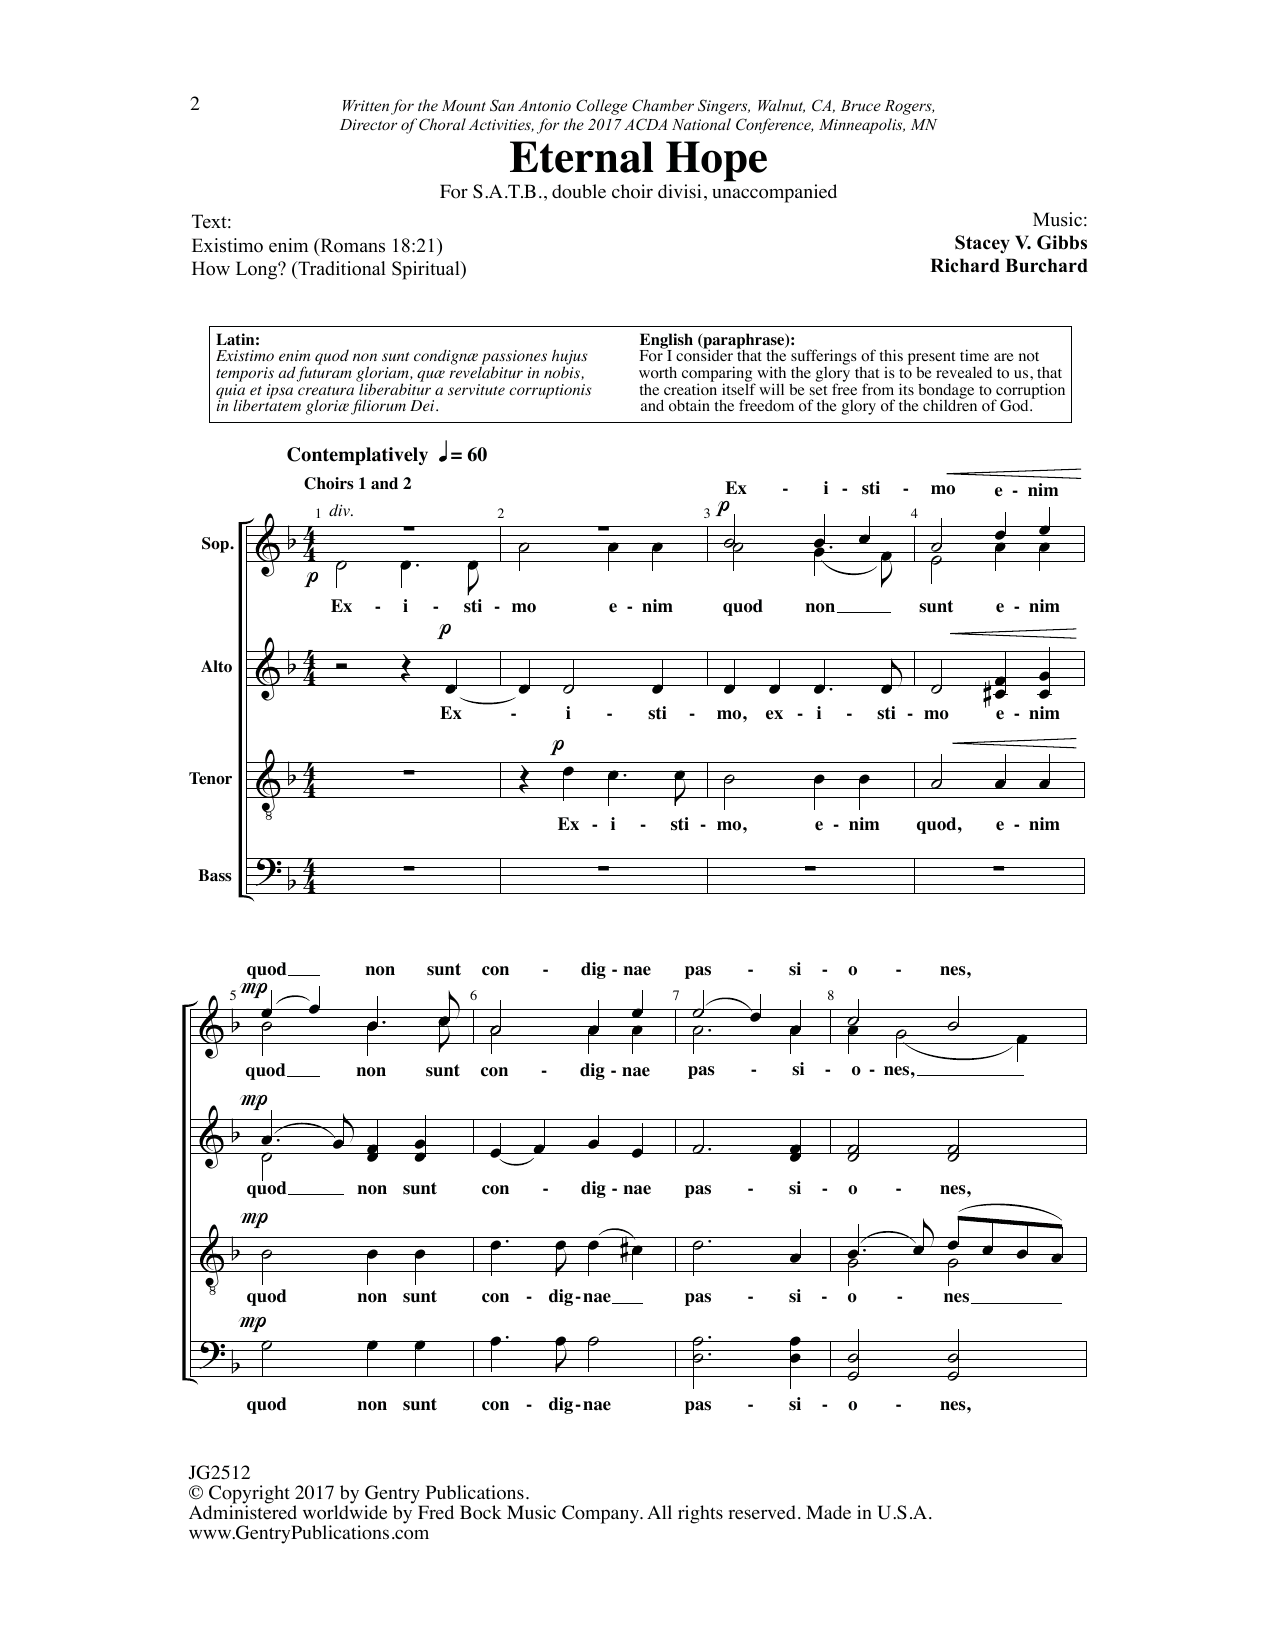 Richard Burchard Eternal Hope Sheet Music Notes & Chords for Choral - Download or Print PDF